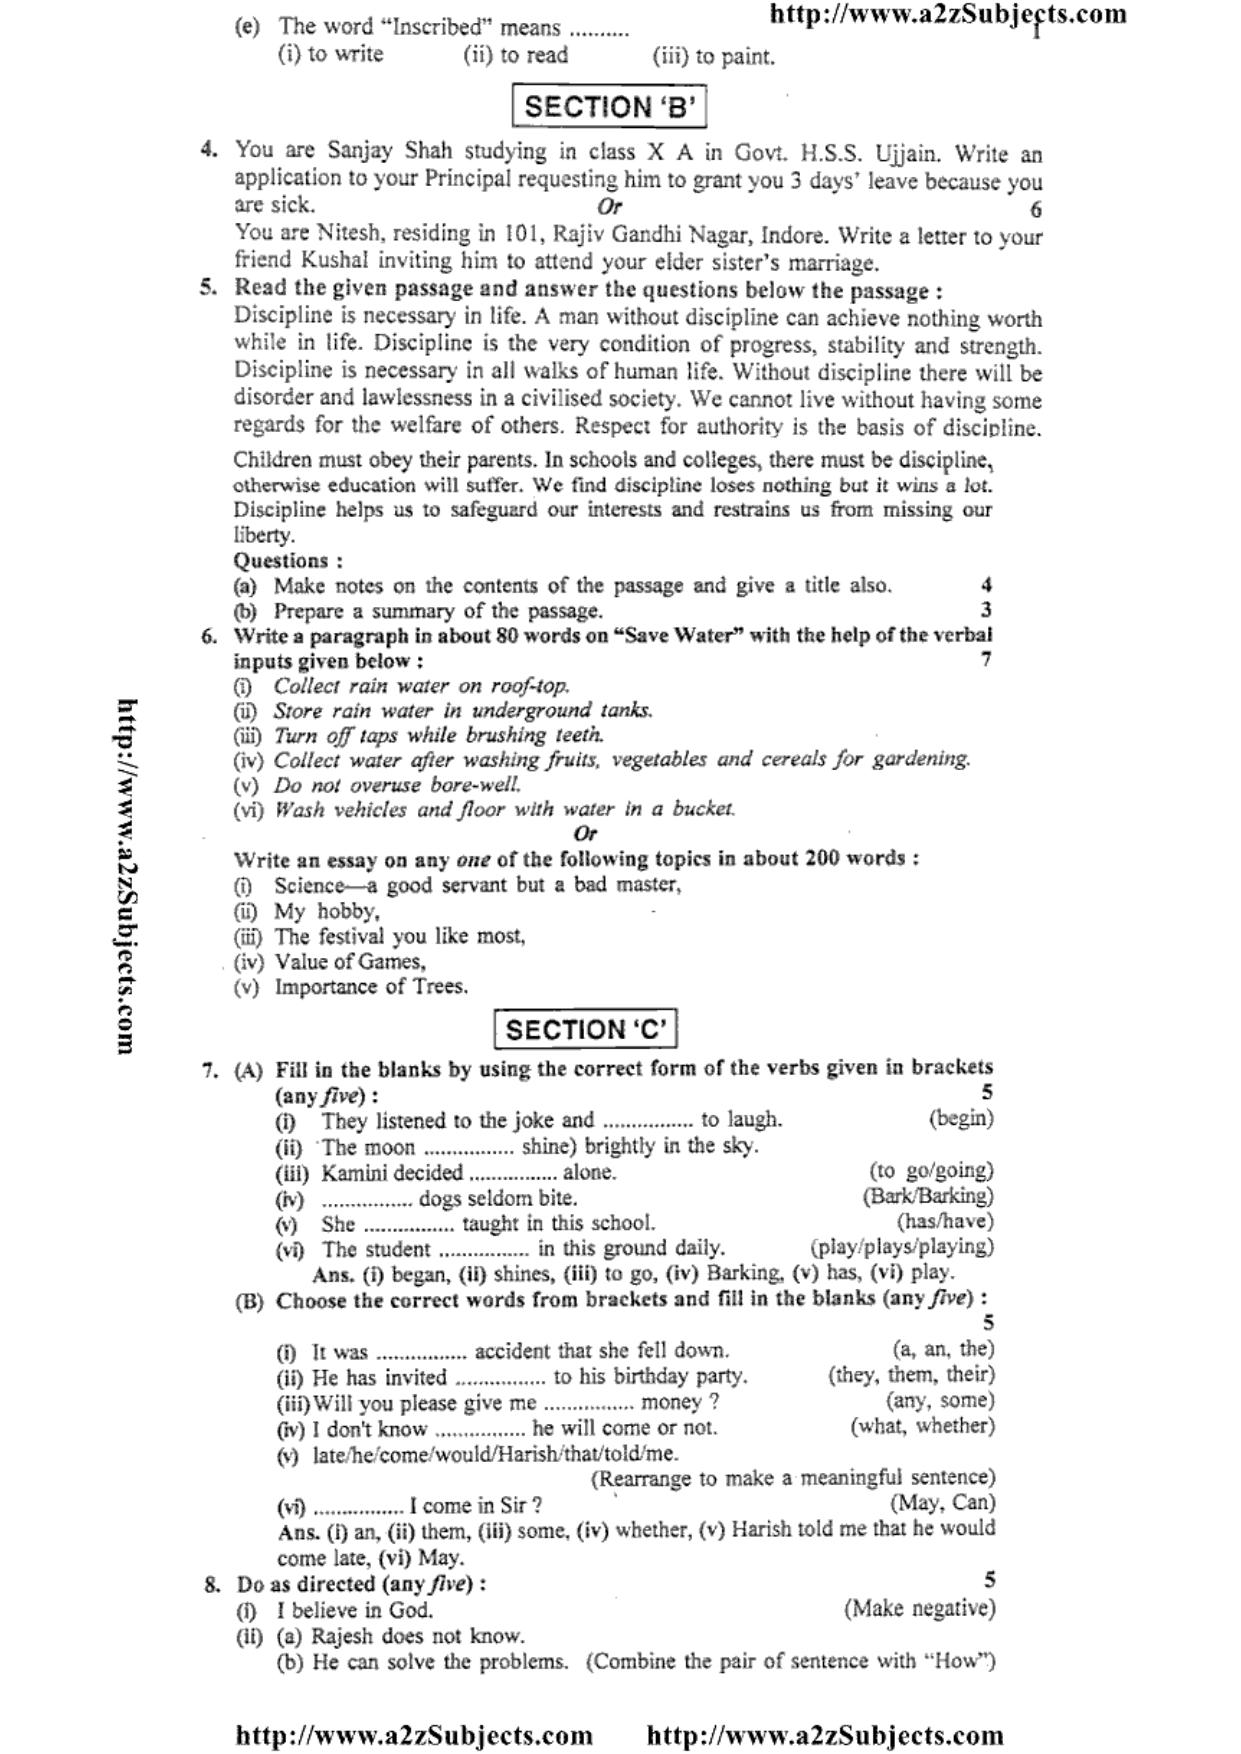 MP Board Class 10 English (Hindi Medium) 2016 Question Paper - Page 2